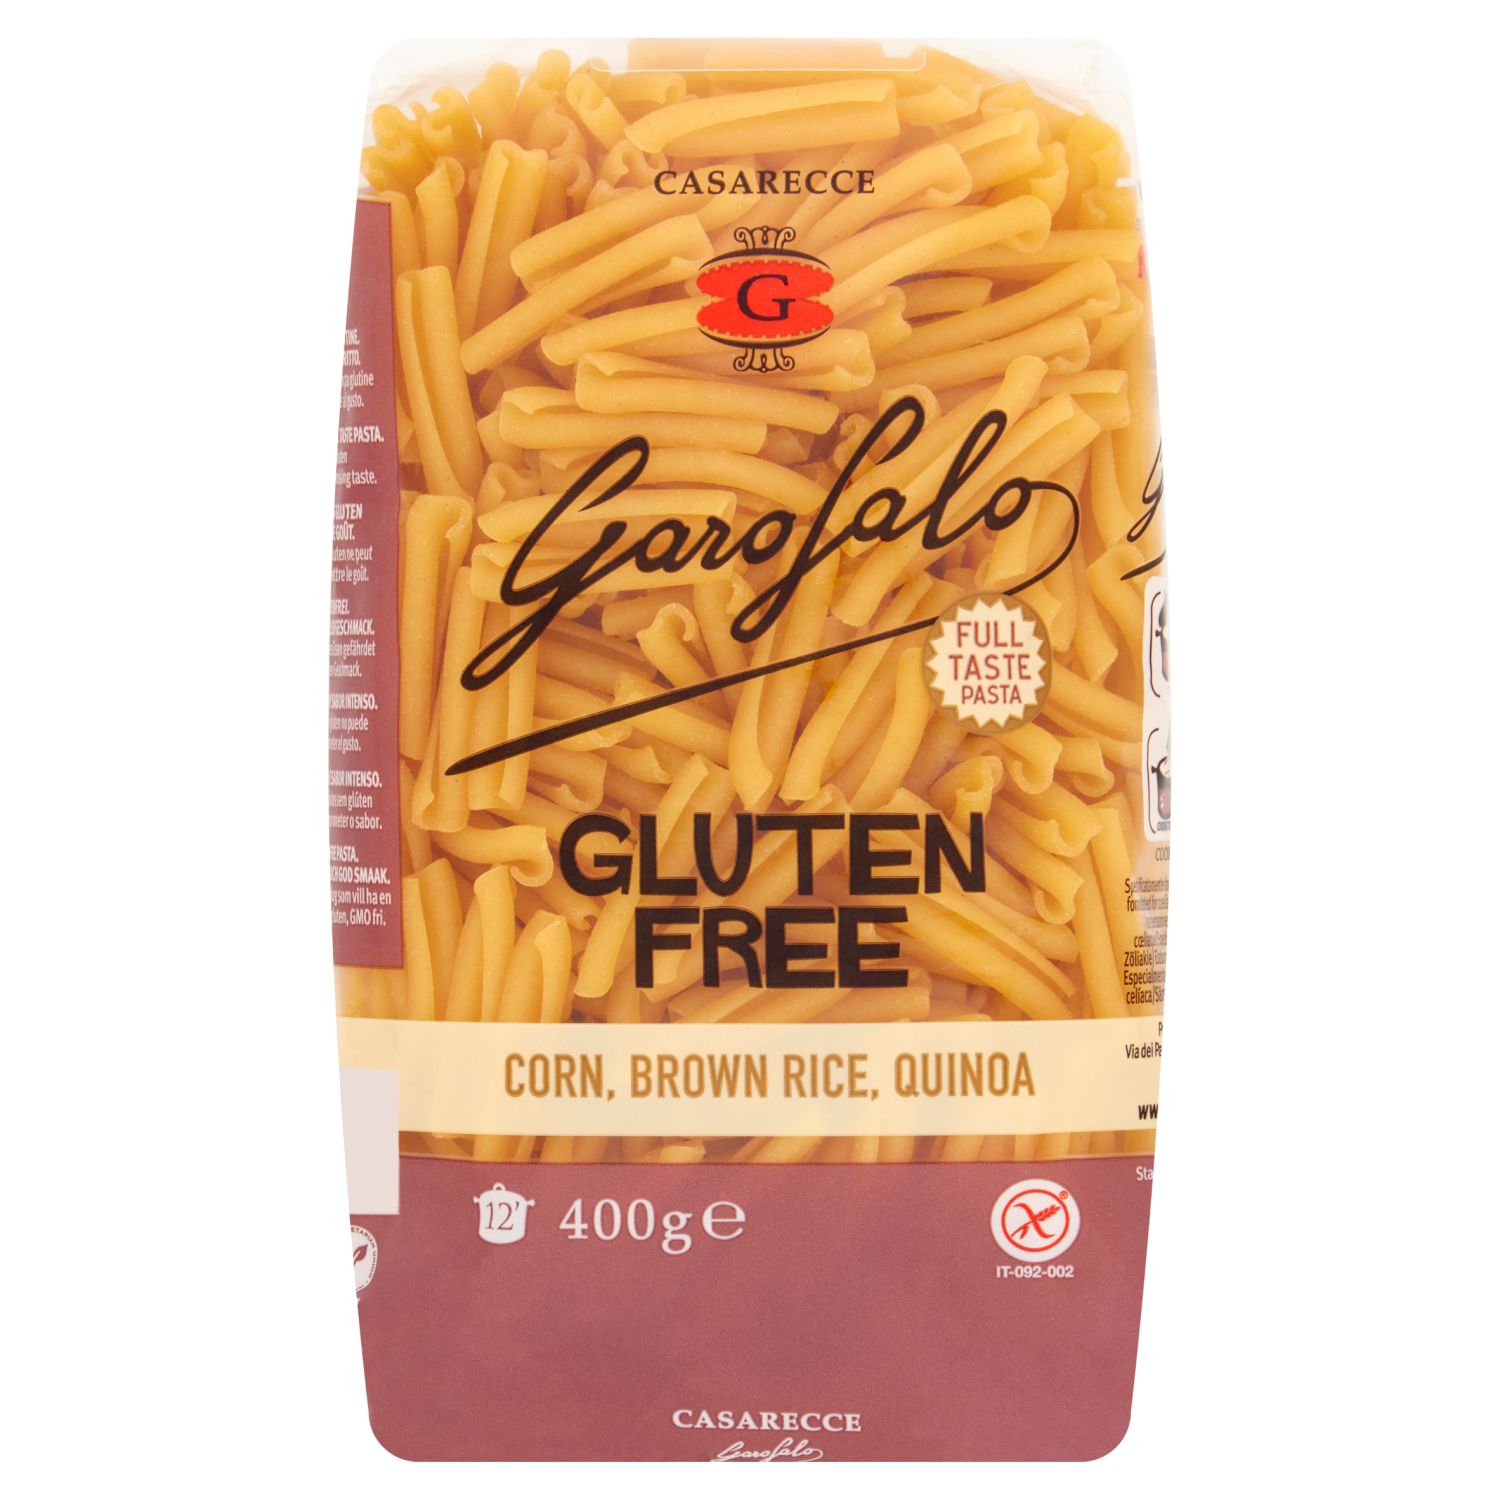 Garofalo Gluten Free Casarecce (400g)